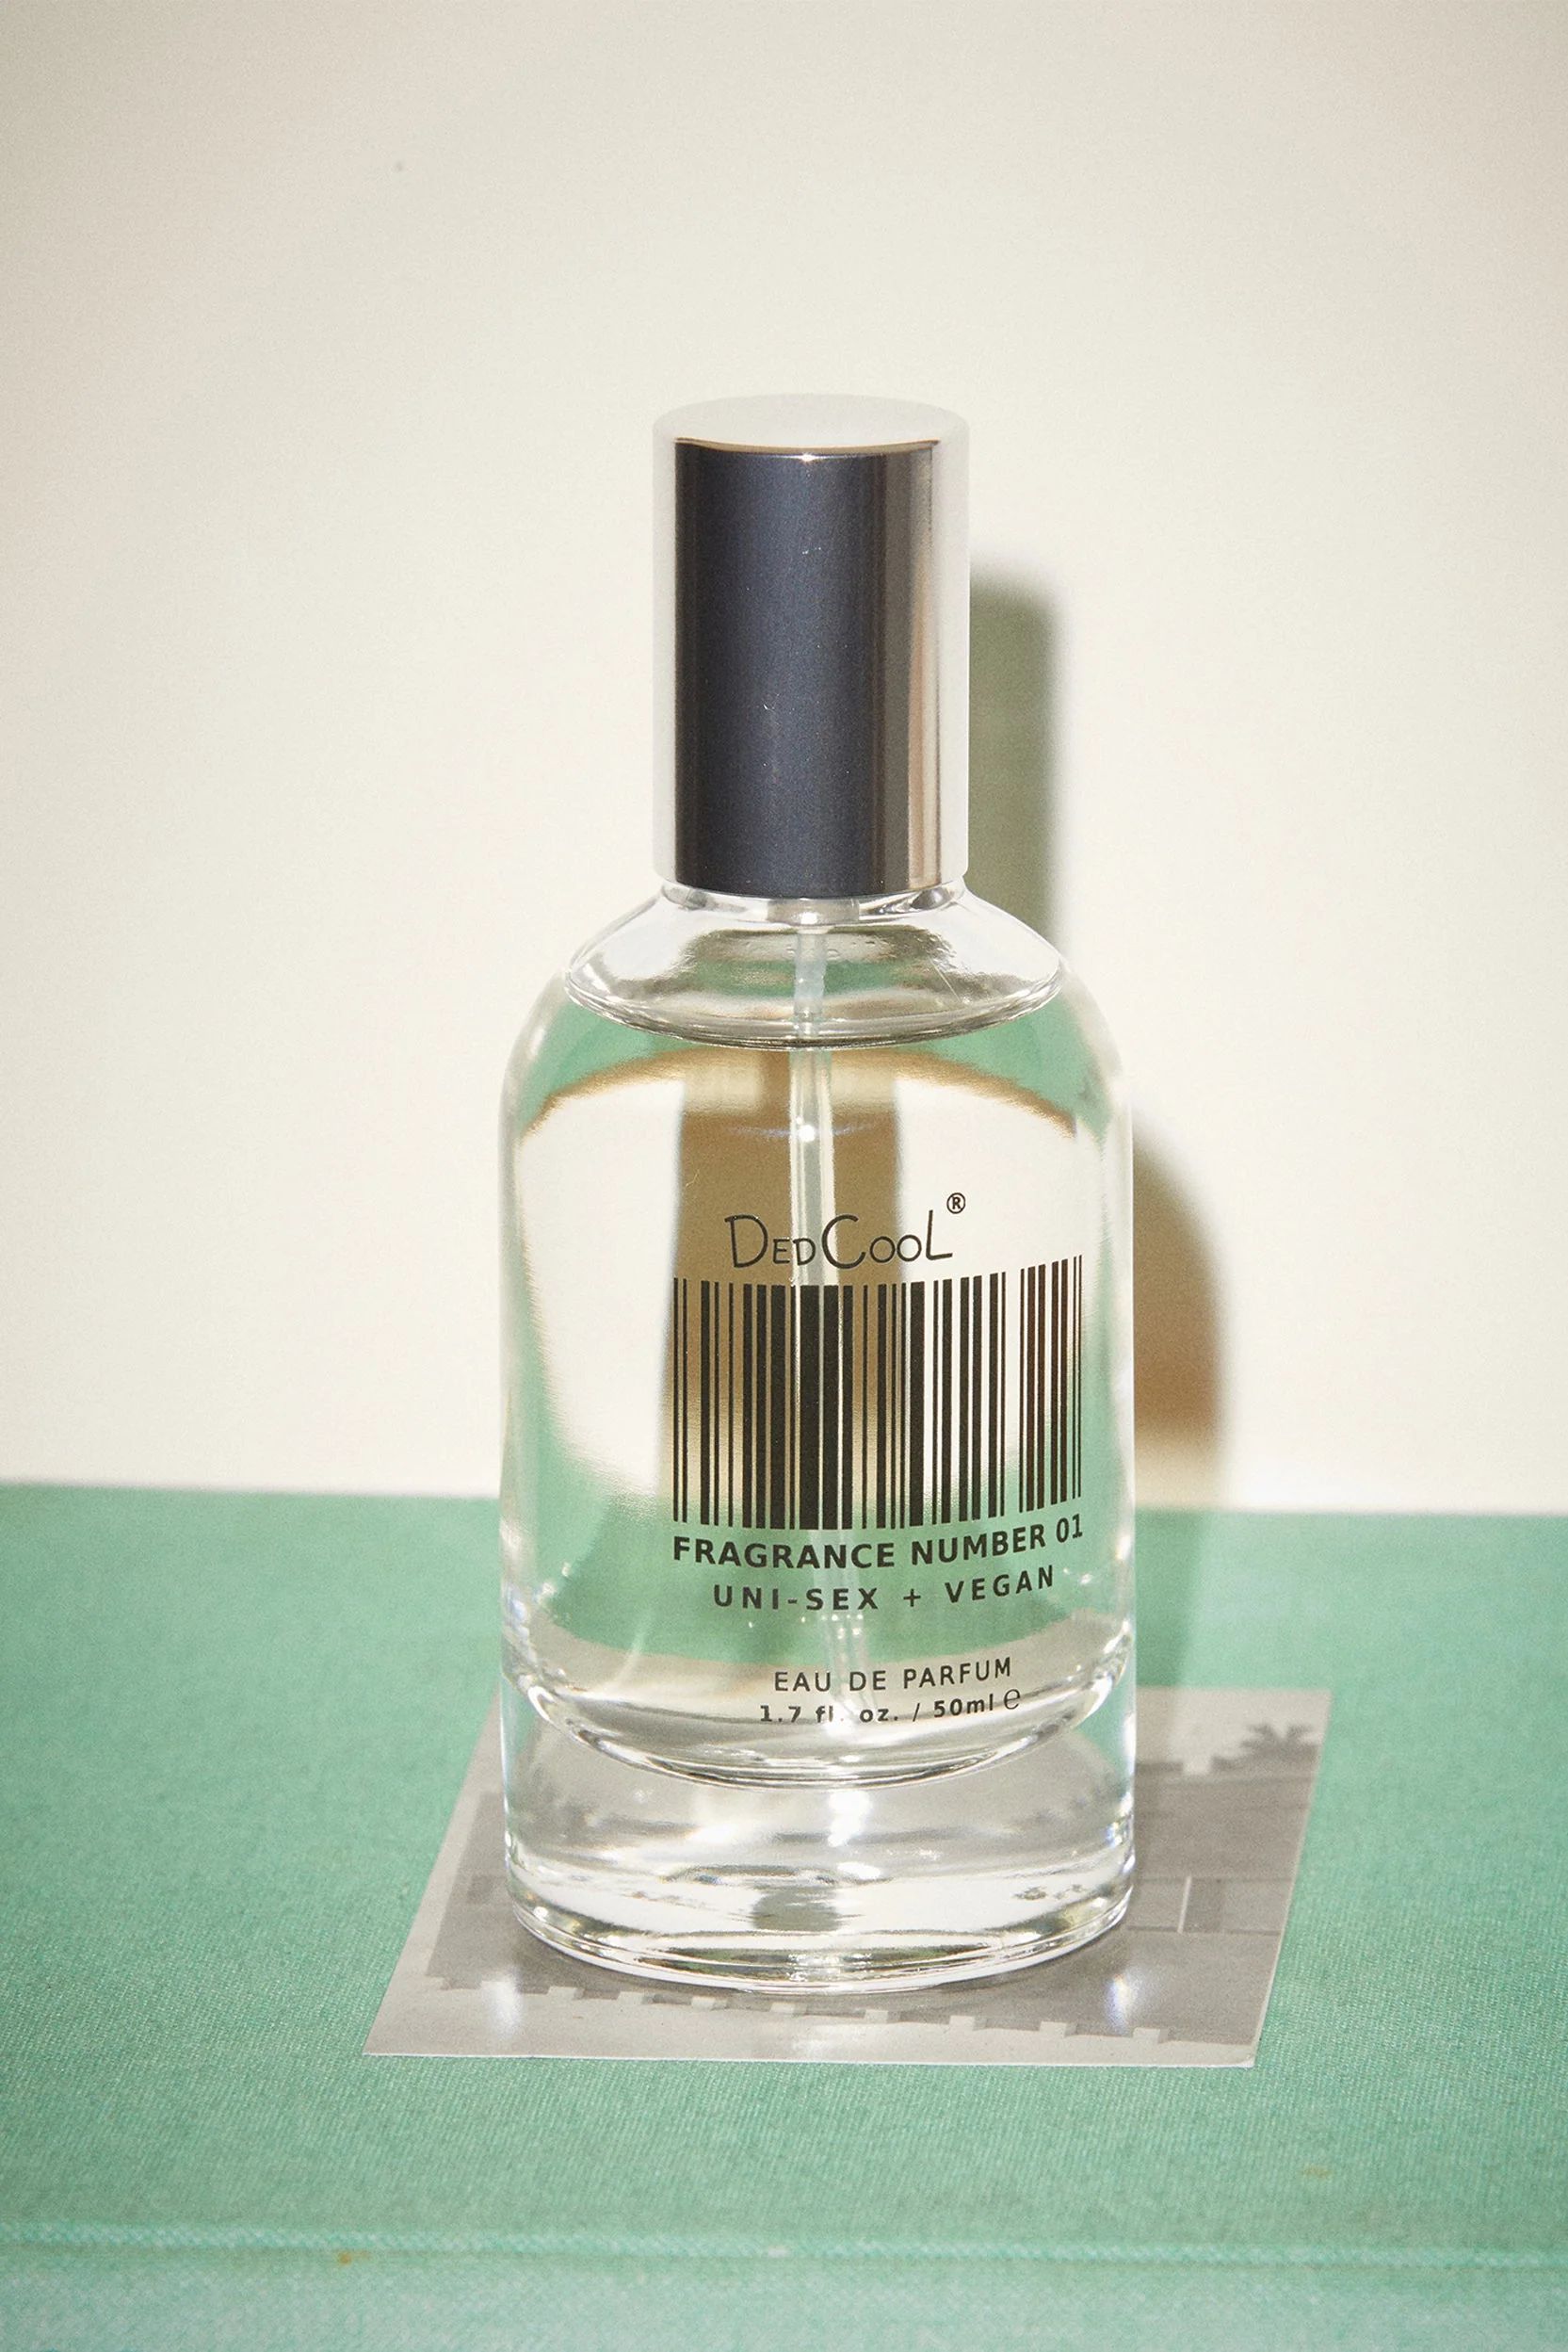 DedCool Fragrance 01 " Taunt" | Burke Decor